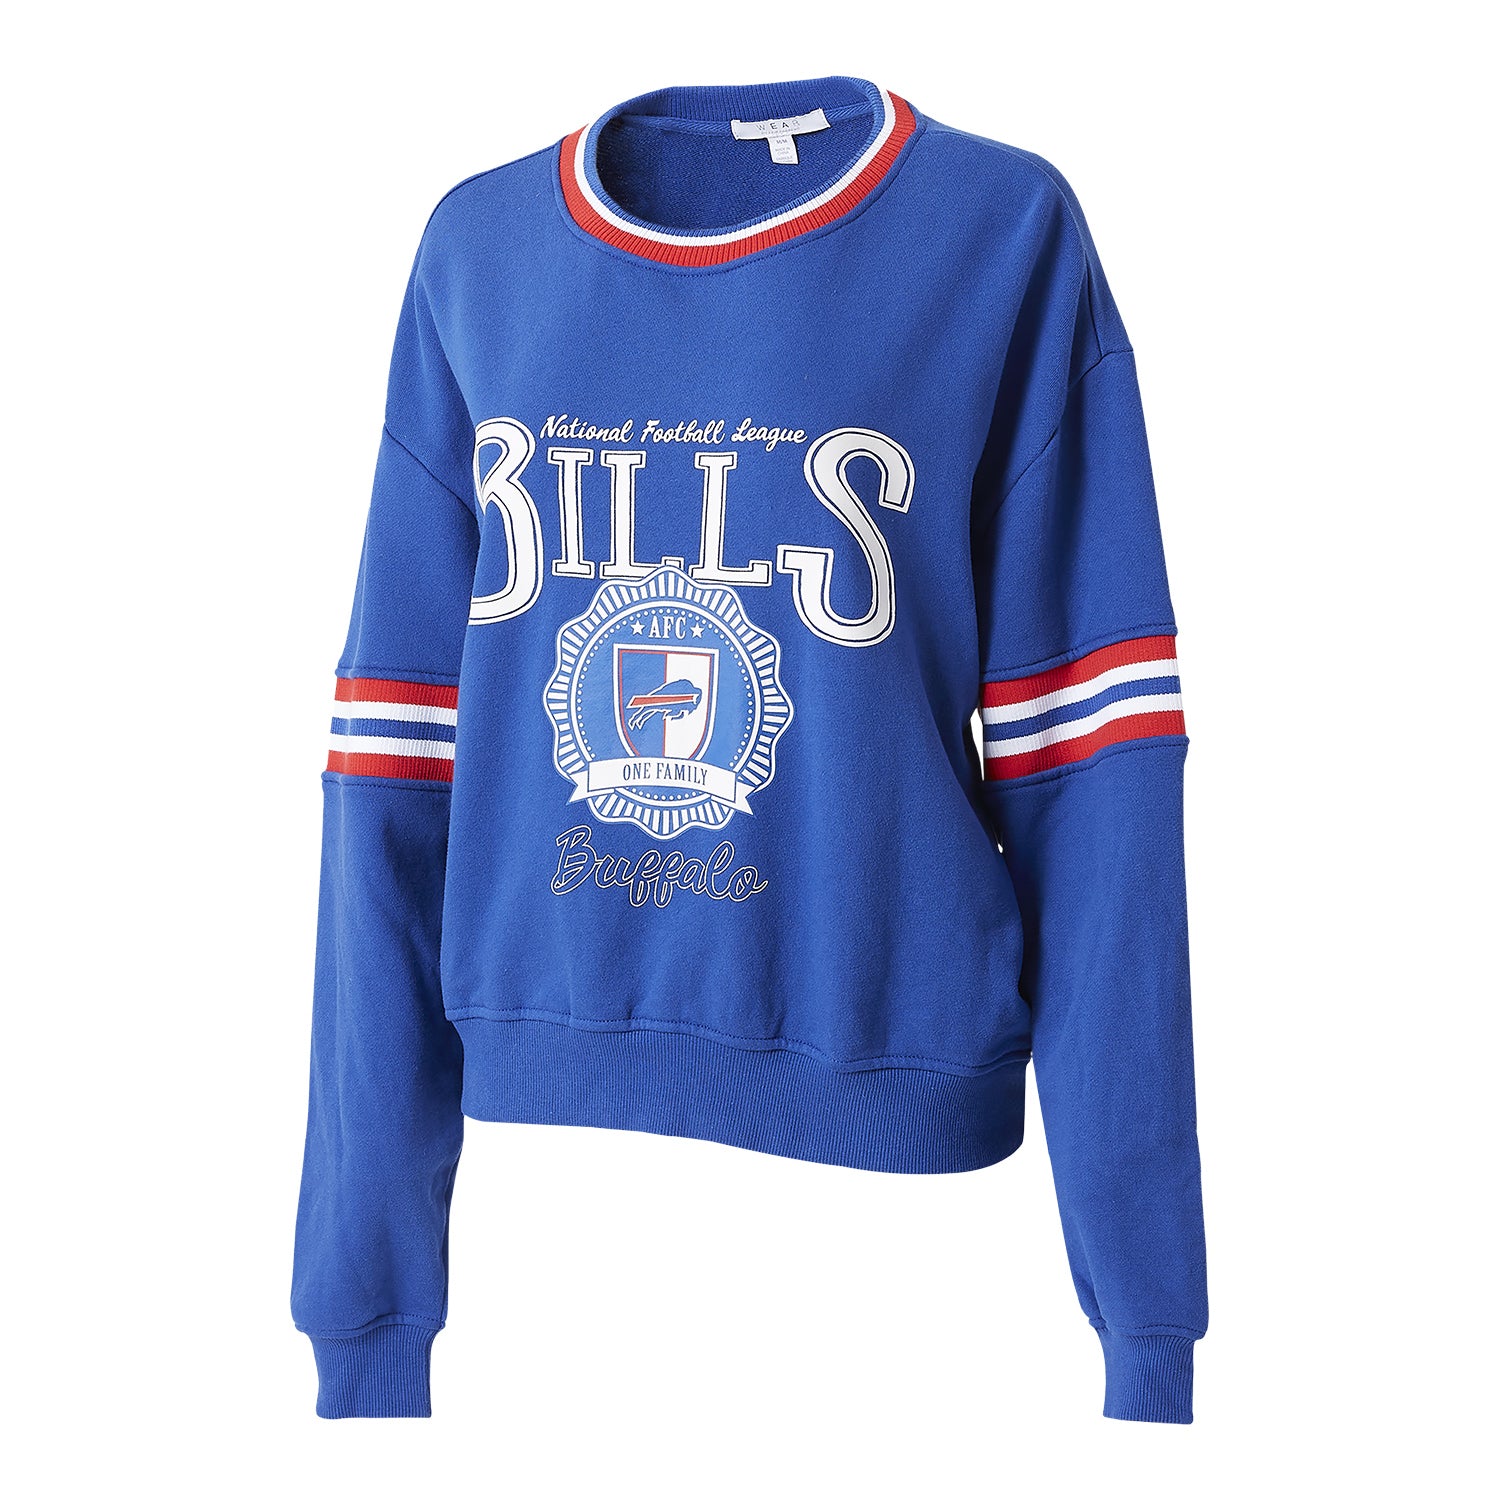 Ladies Bills WEAR by Erin Andrews Varsity Crewneck Sweatshirt